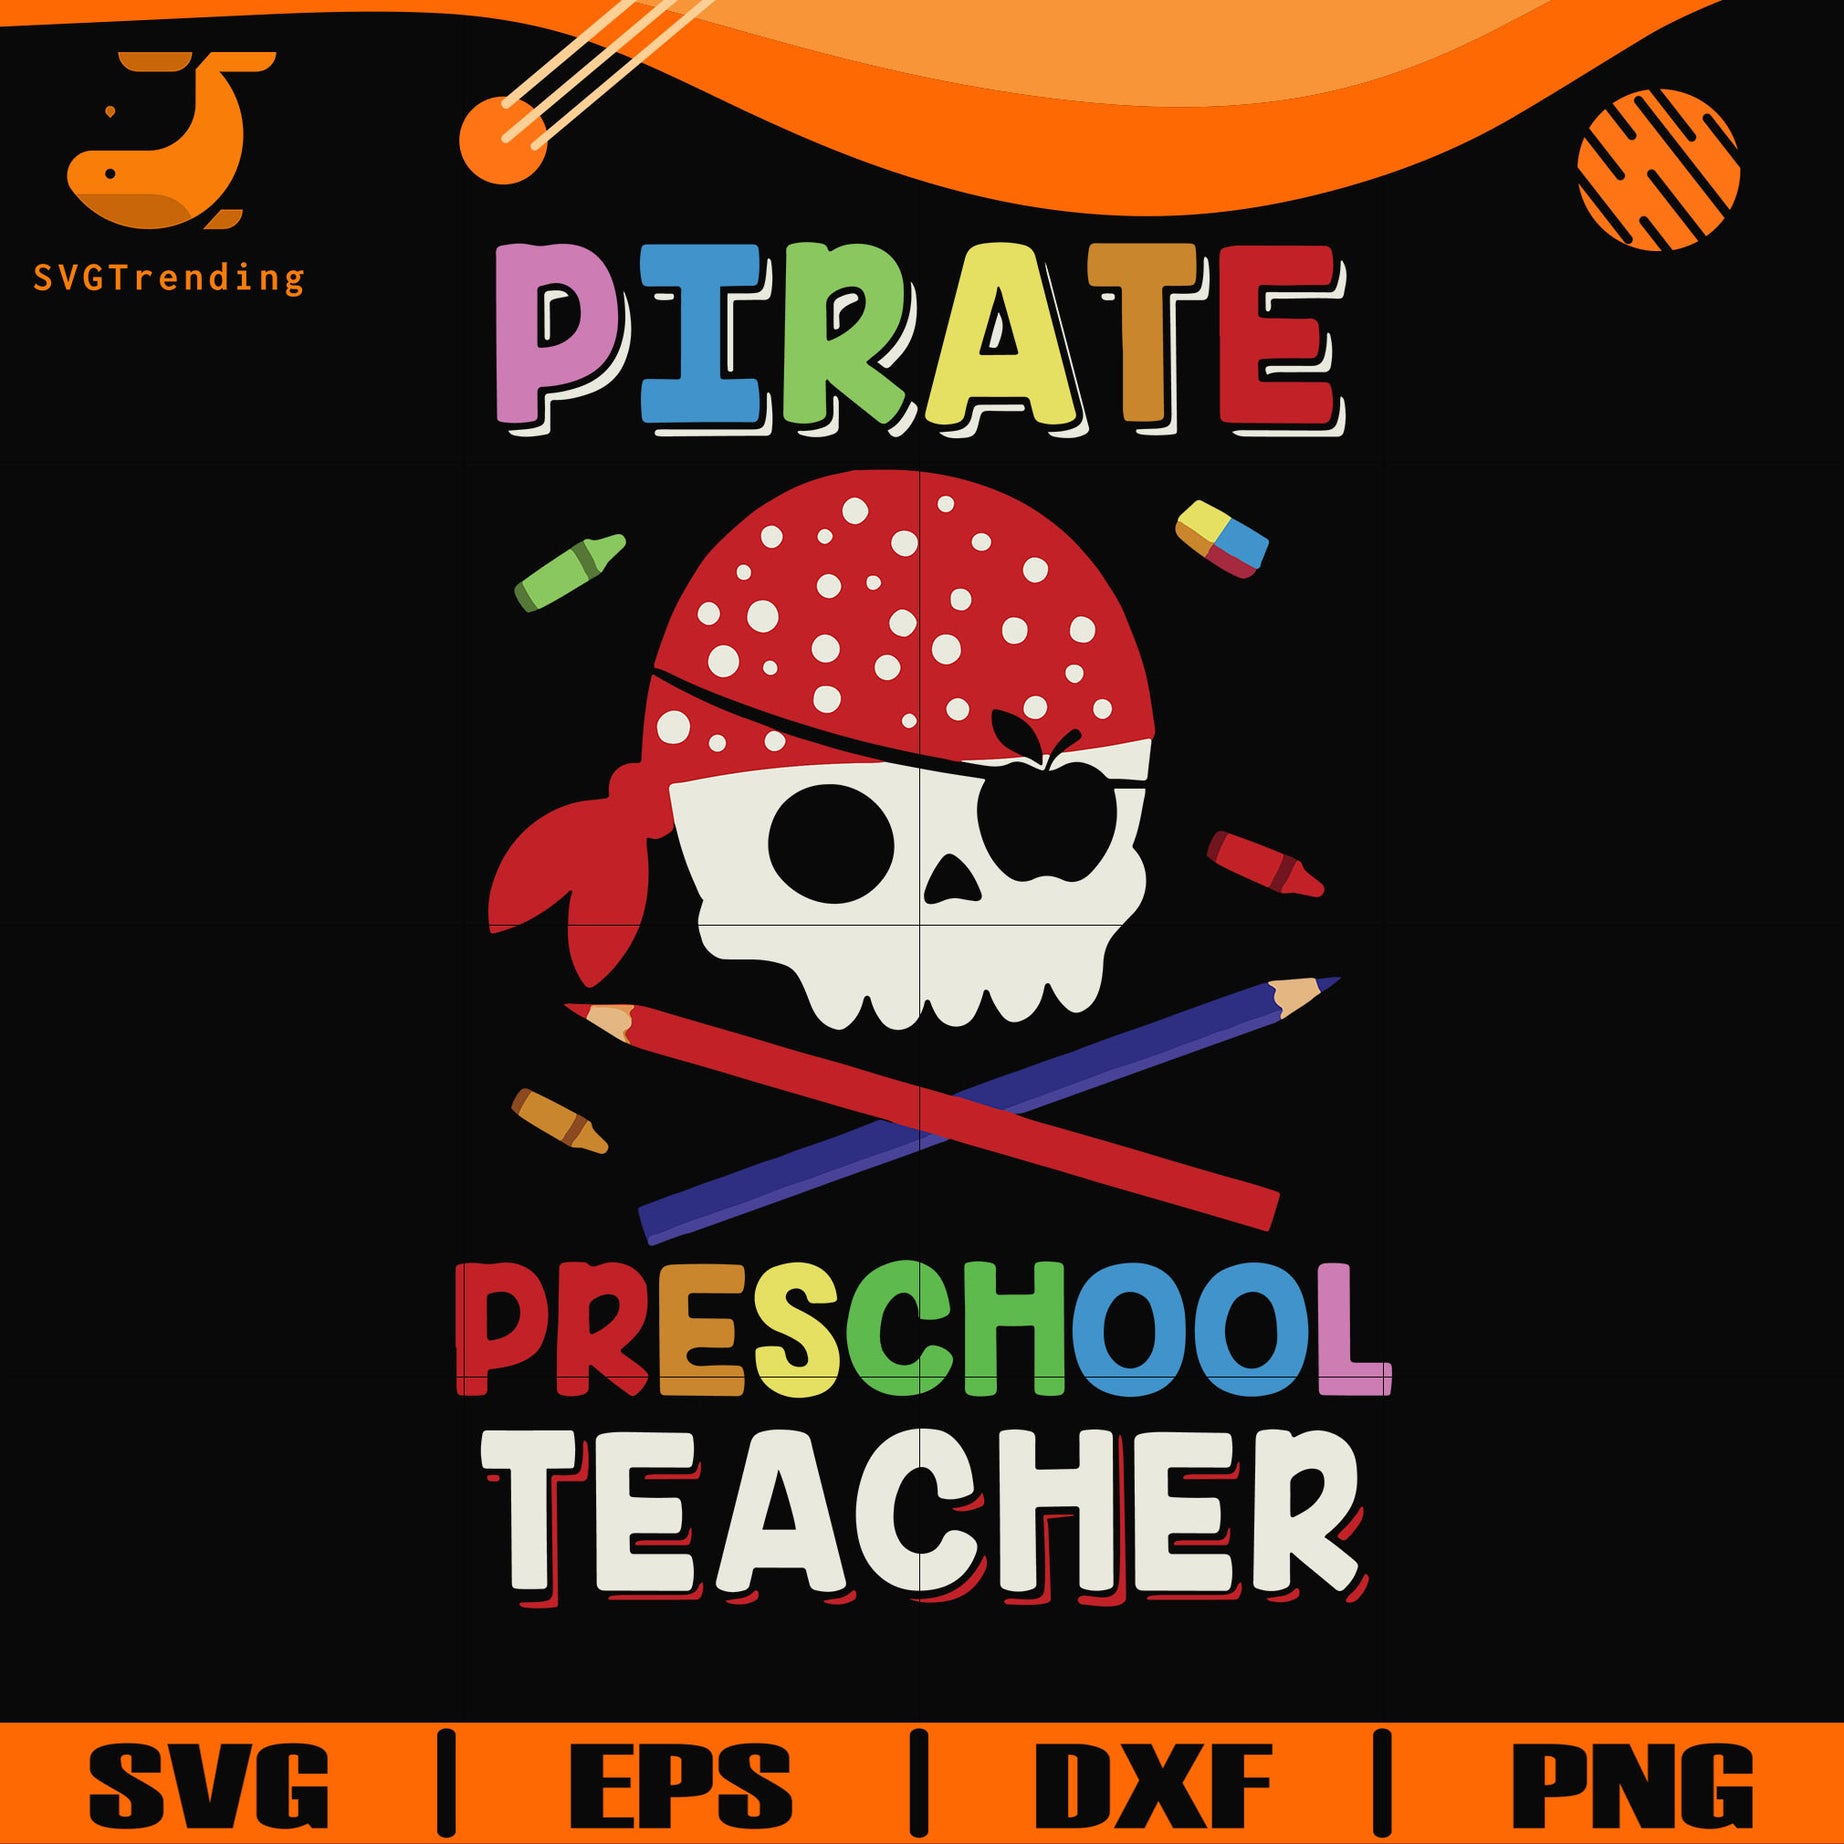 Piate preschool teacher svg, halloween svg, png, dxf, eps digital file HWL25072020